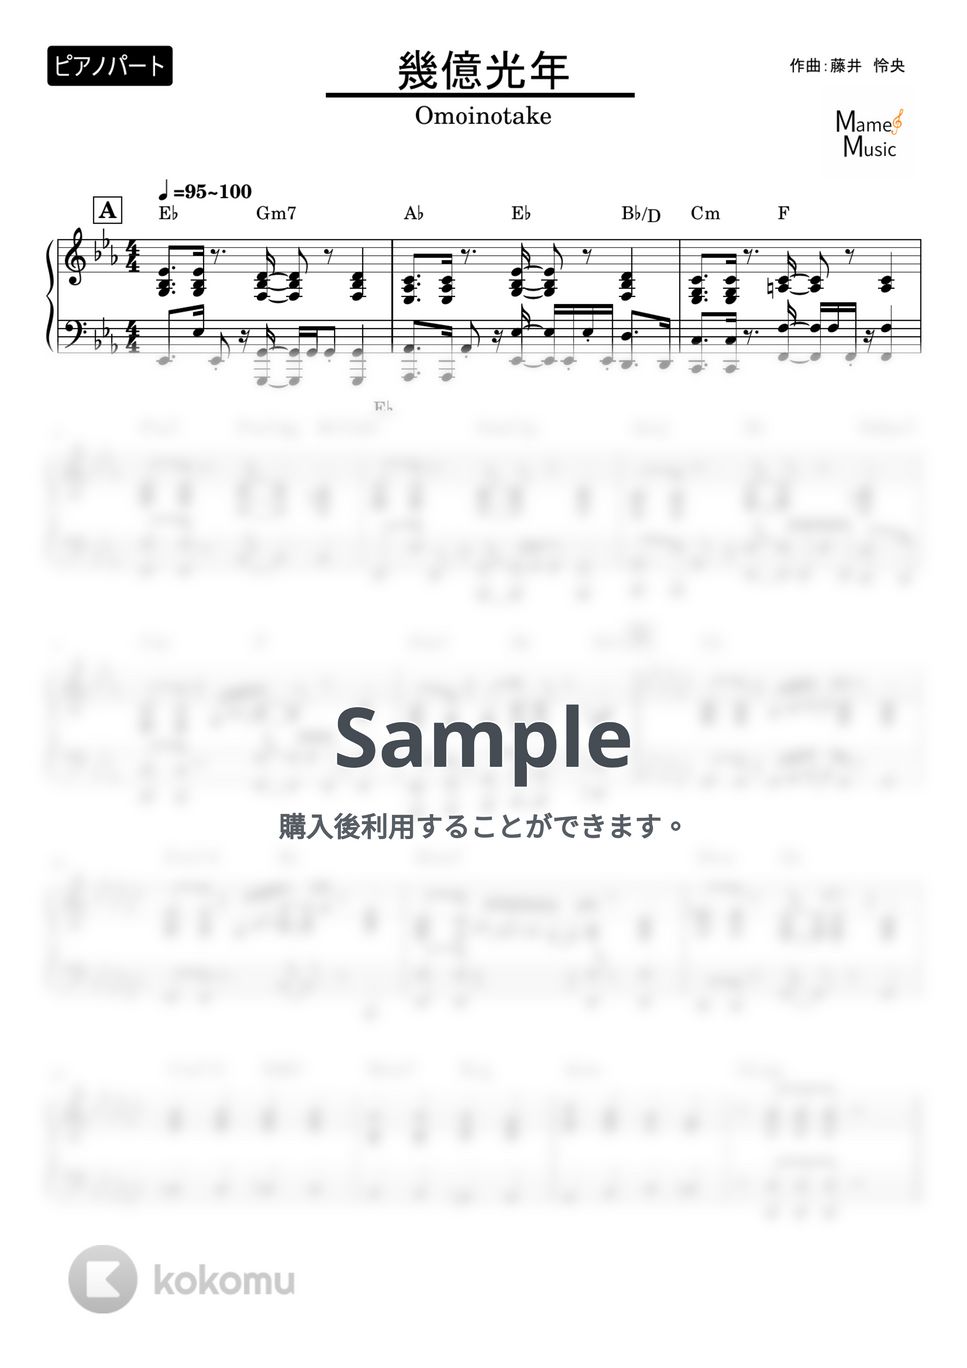 Omoinotake - 幾億光年 (ピアノパート) by mame